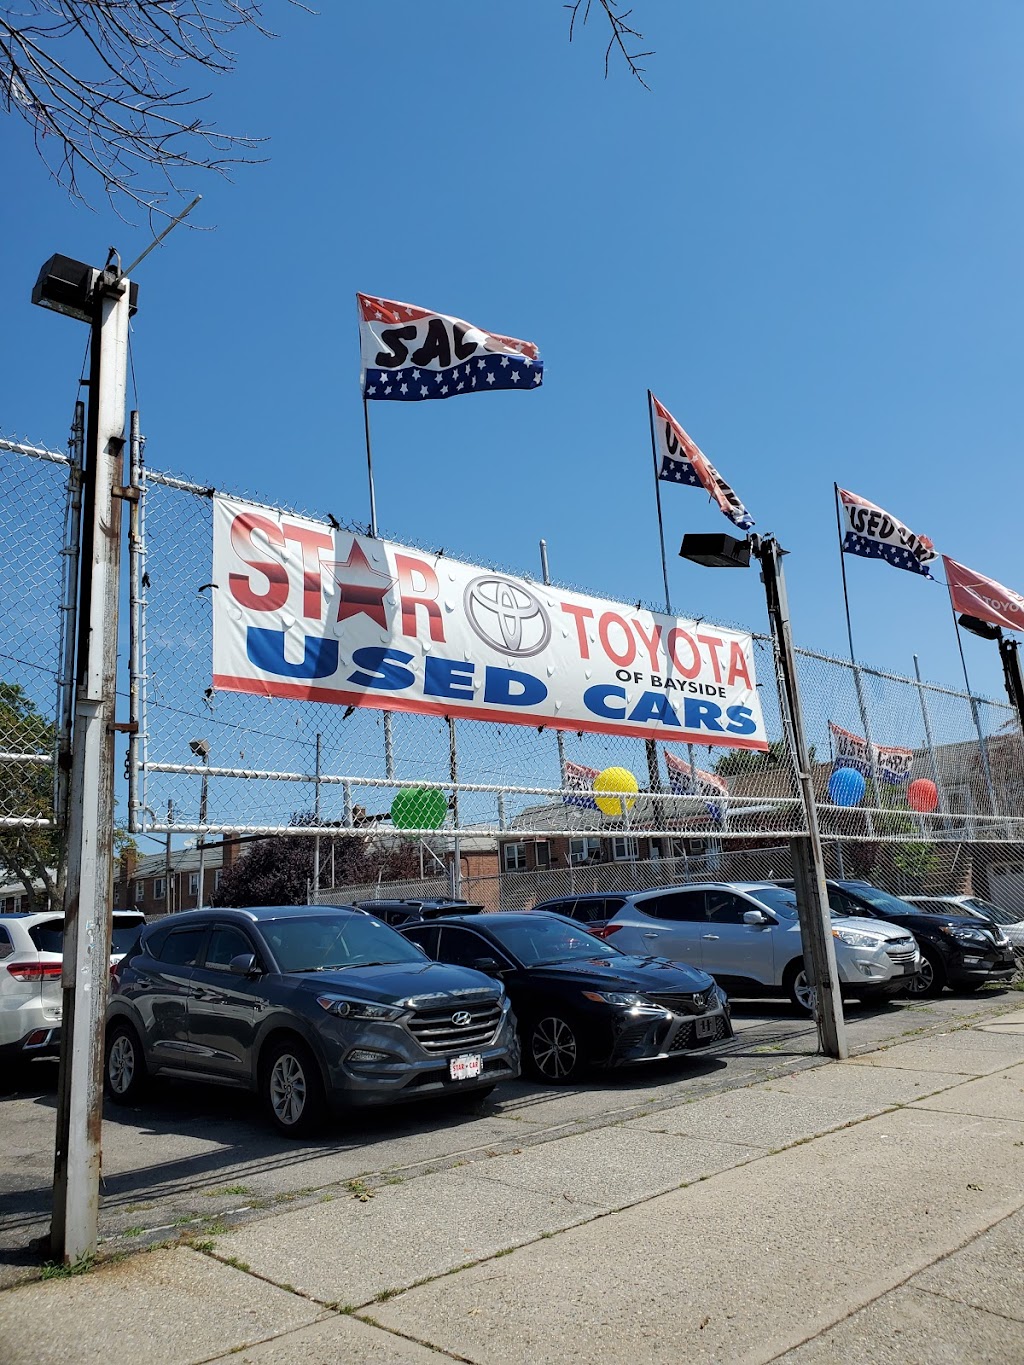 Star Auto Sales Of Bayside | 190-11 Northern Blvd, Flushing, NY 11358 | Phone: (718) 445-2525